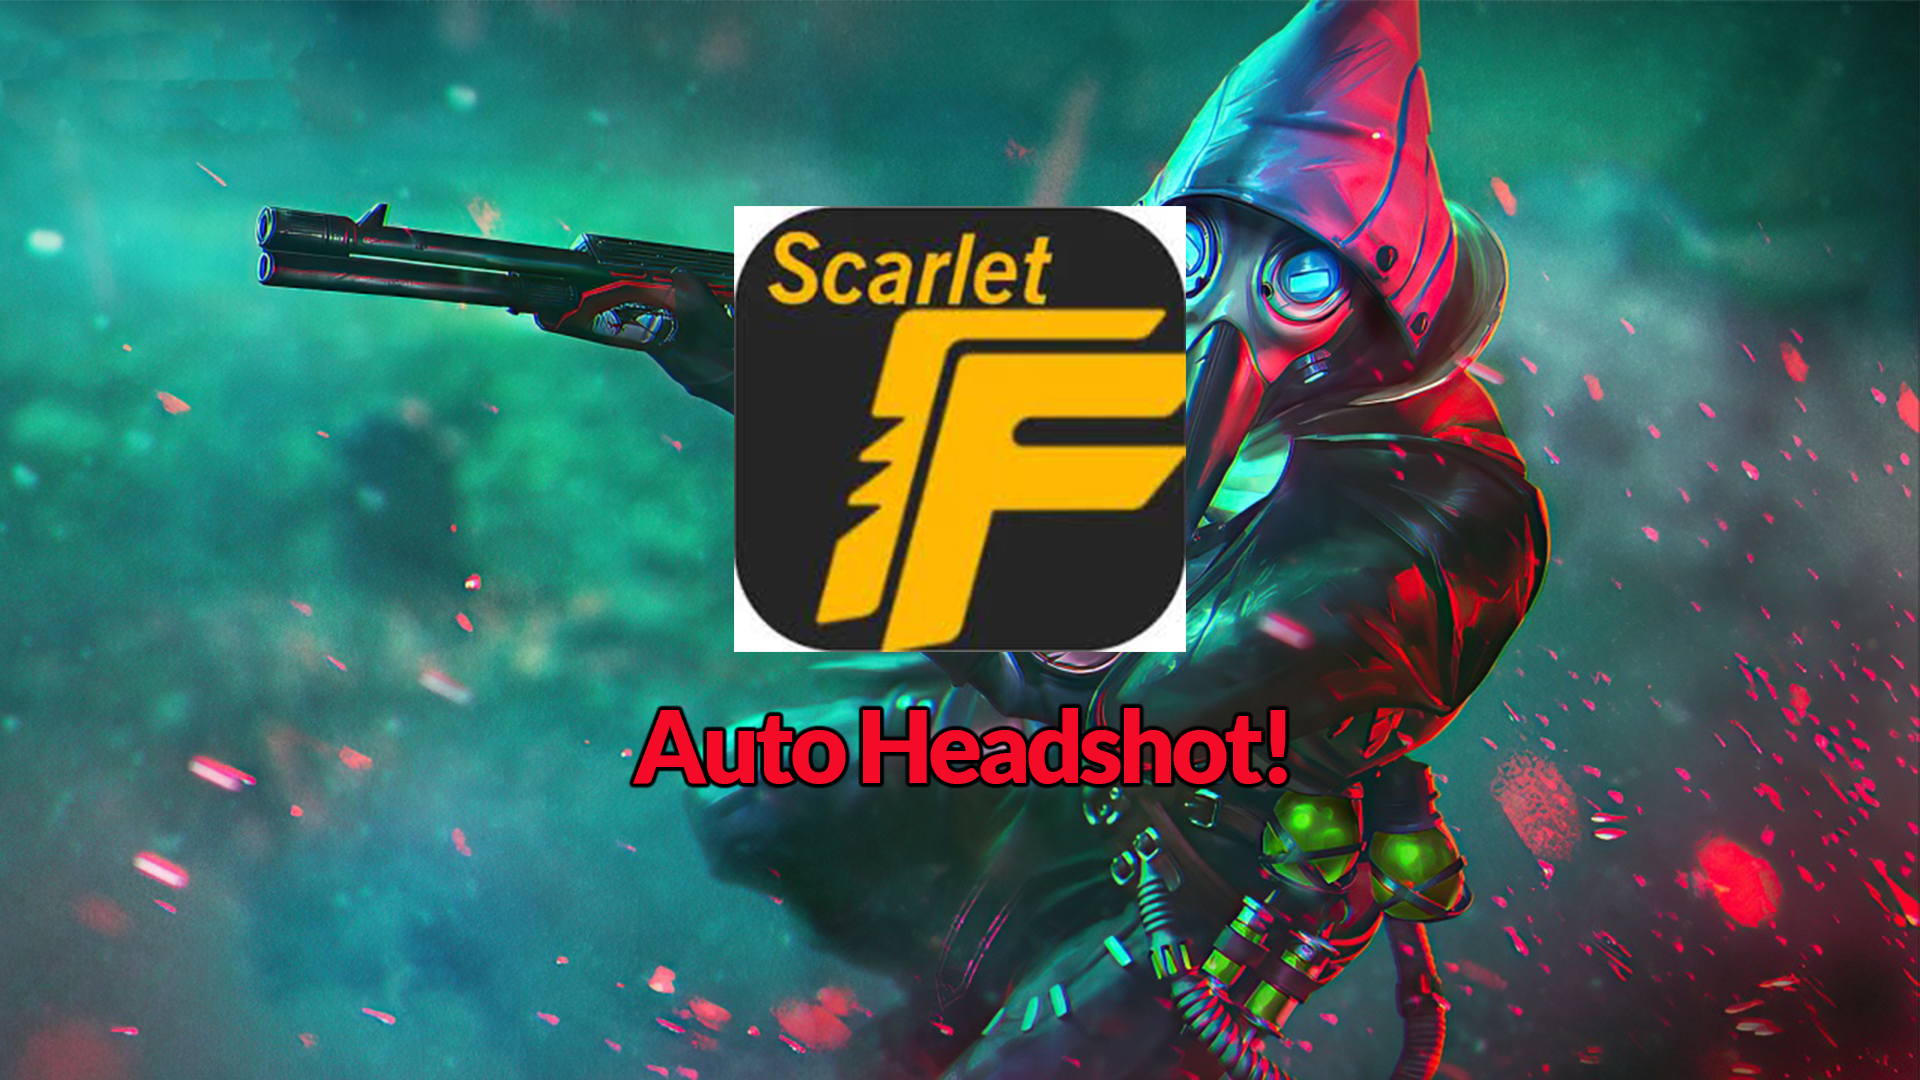 Download Scarlet Ff Auto Headshot Terbaru 2023! - Install